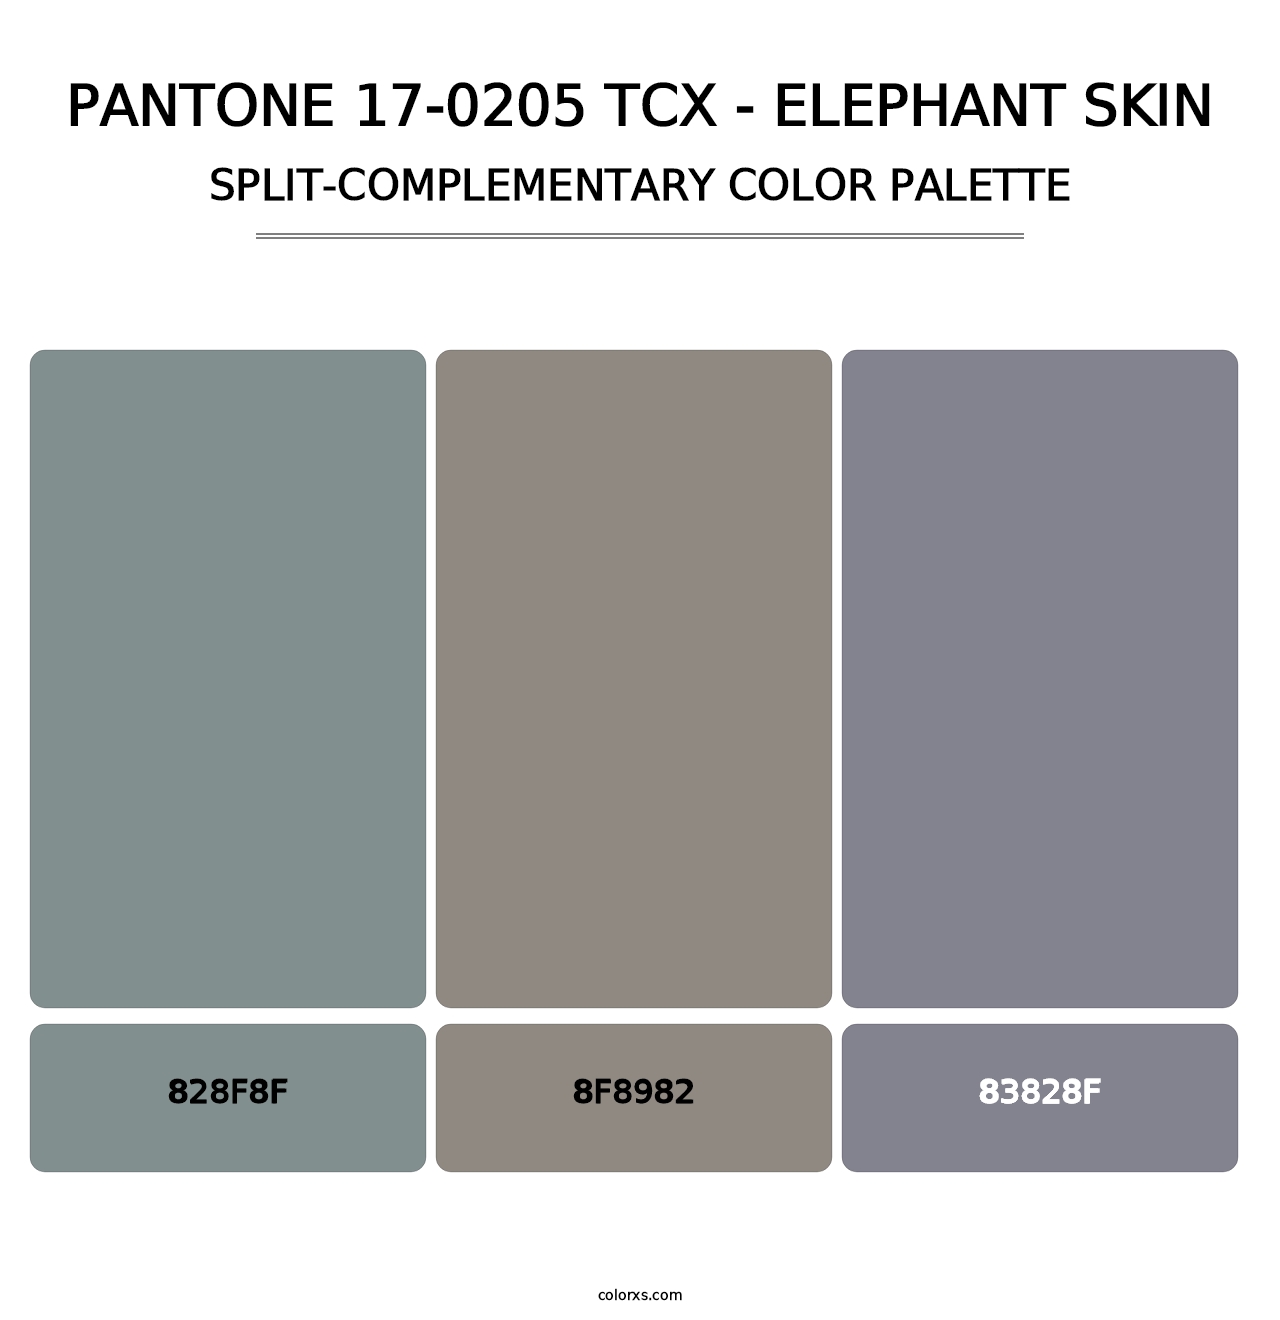 PANTONE 17-0205 TCX - Elephant Skin - Split-Complementary Color Palette